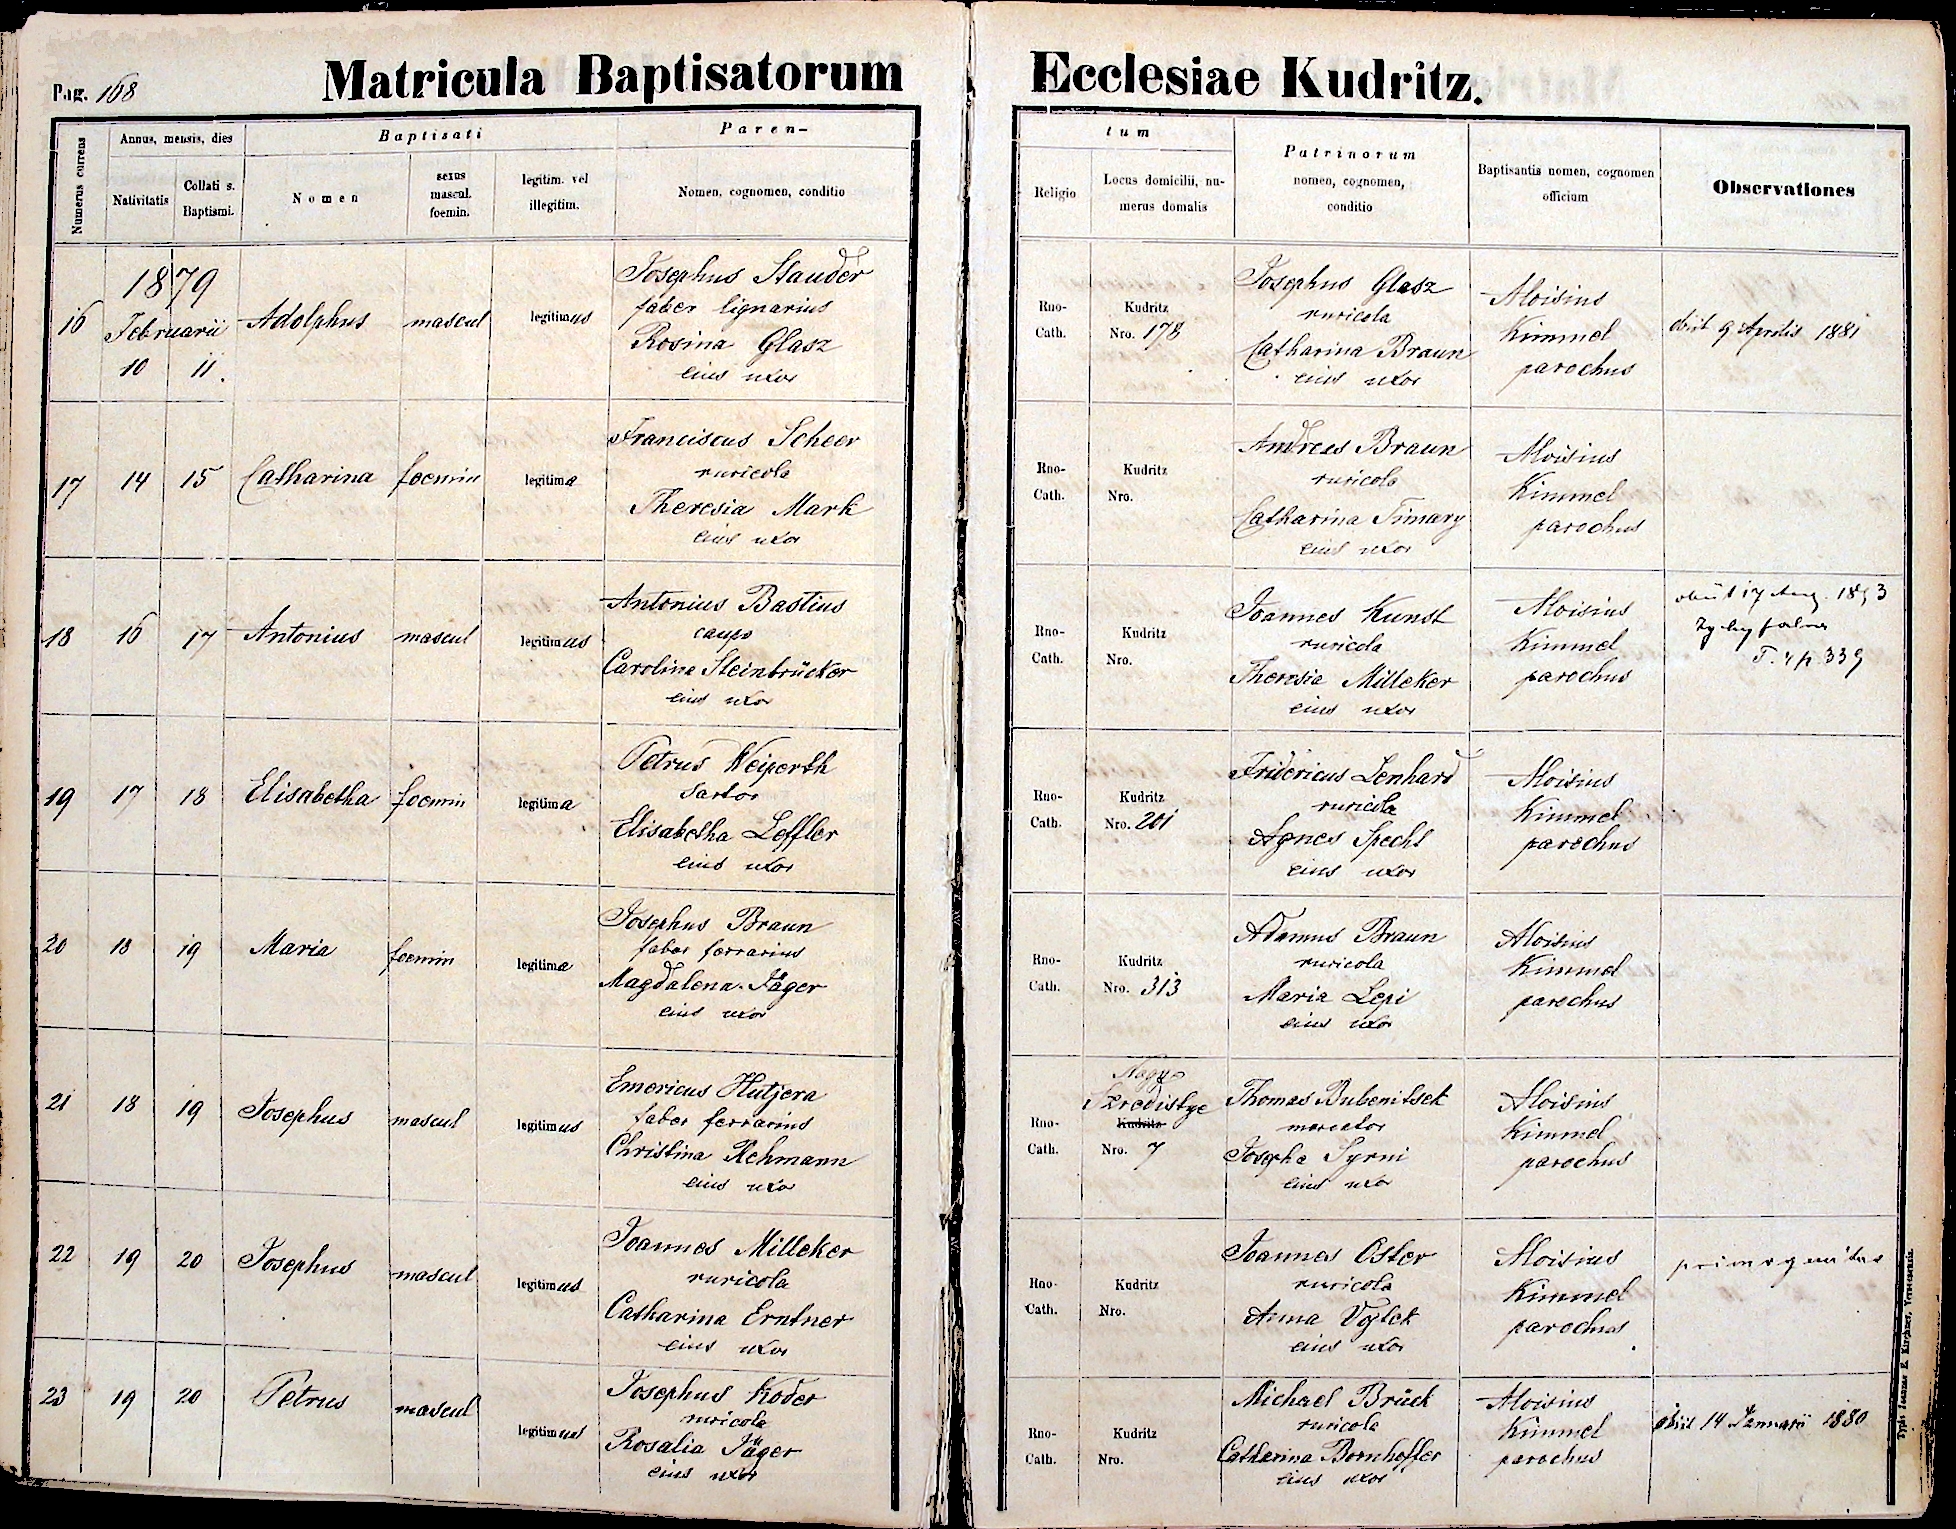 images/church_records/BIRTHS/1870-1879B/1879/168